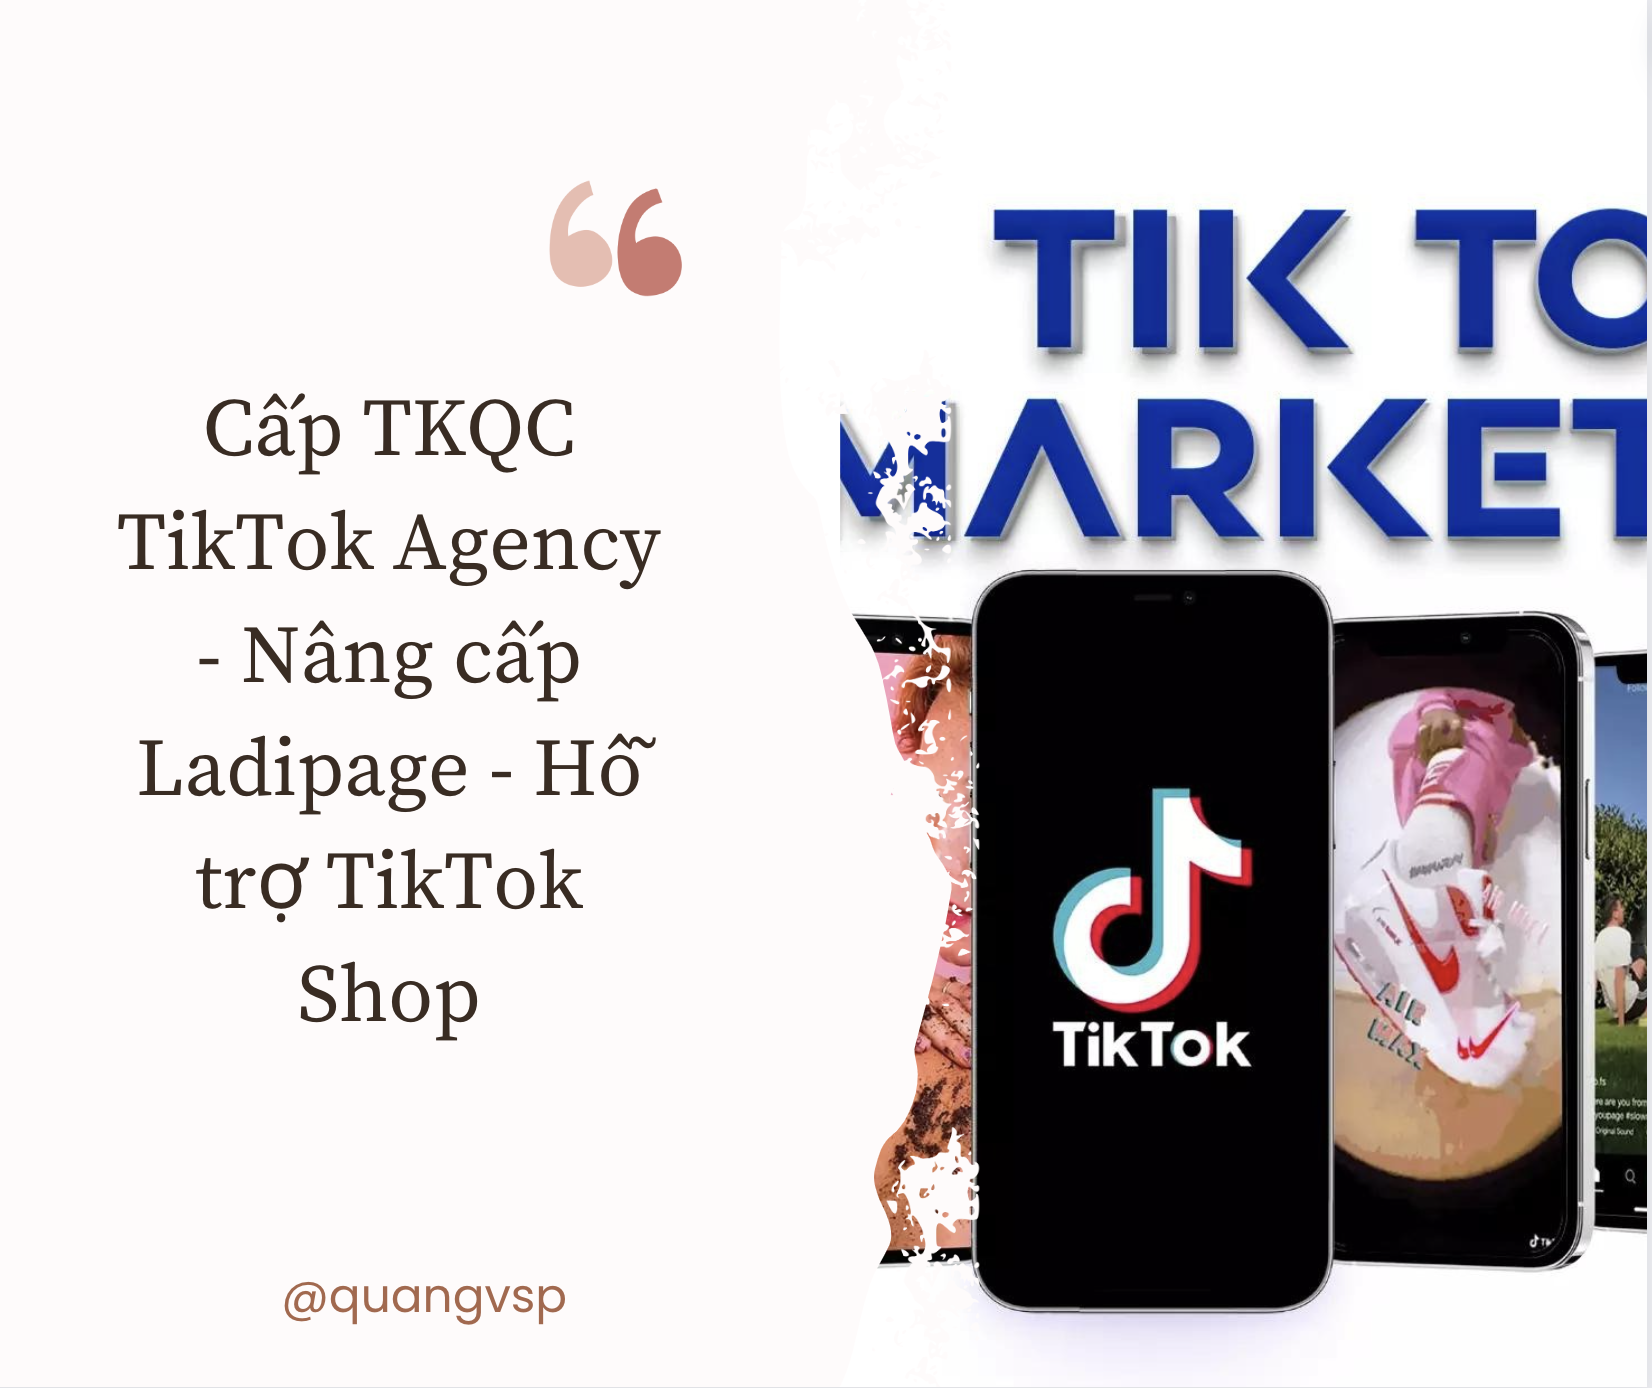 Cấp TKQC TikTok Agency - Nâng cấp Ladipage - Hỗ trợ TikTok Shop